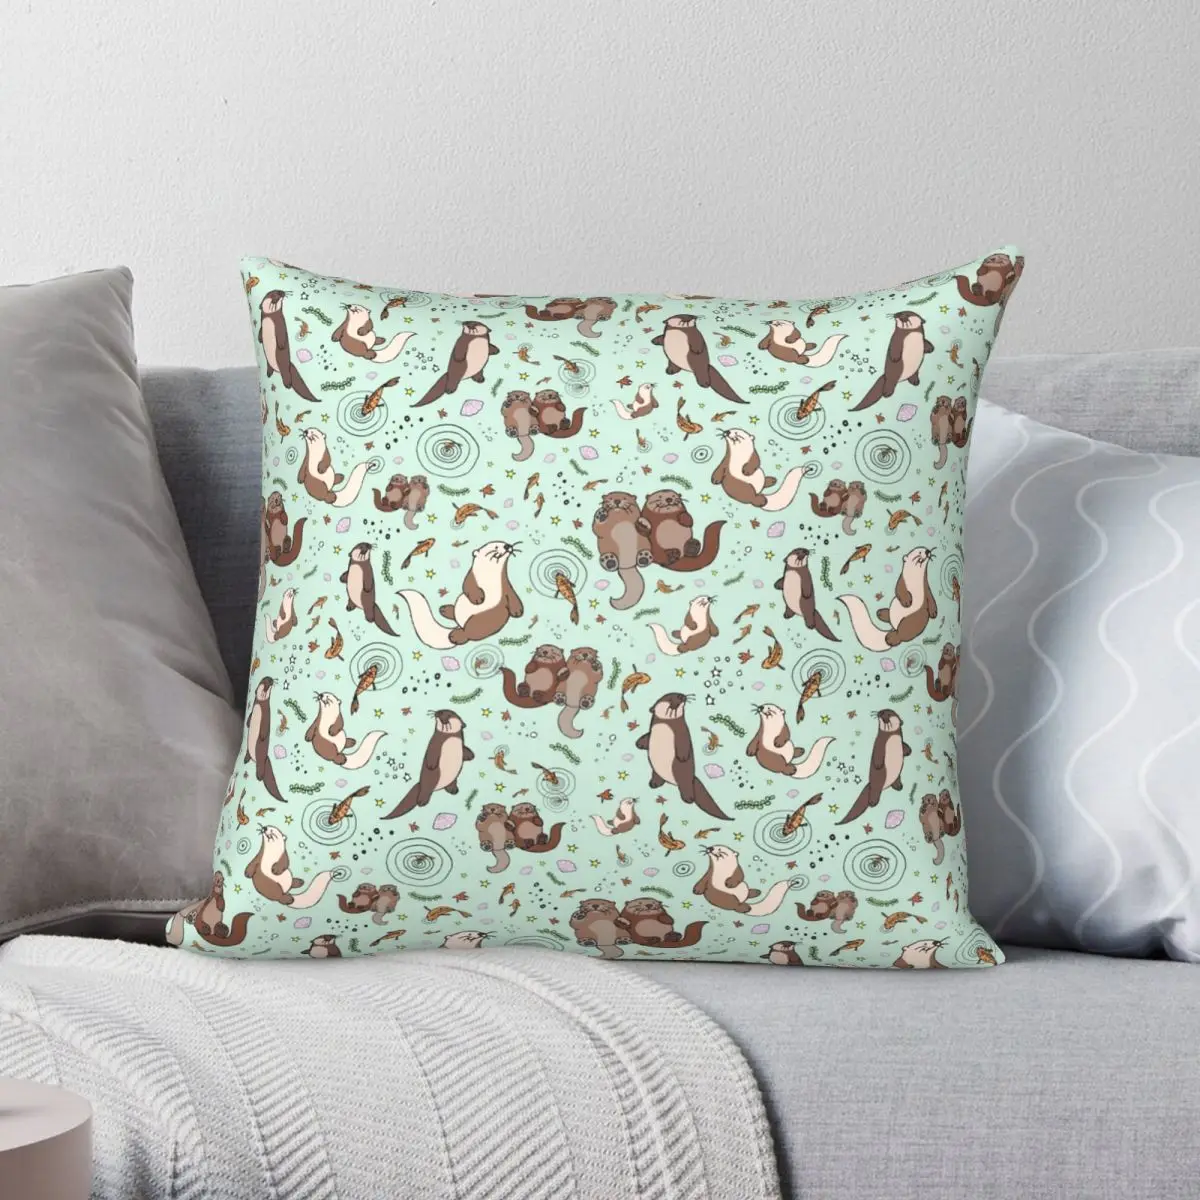 

Otters In Blue Square Pillowcase Polyester Linen Velvet Pattern Zip Decor Pillow Case Sofa Cushion Cover 18"